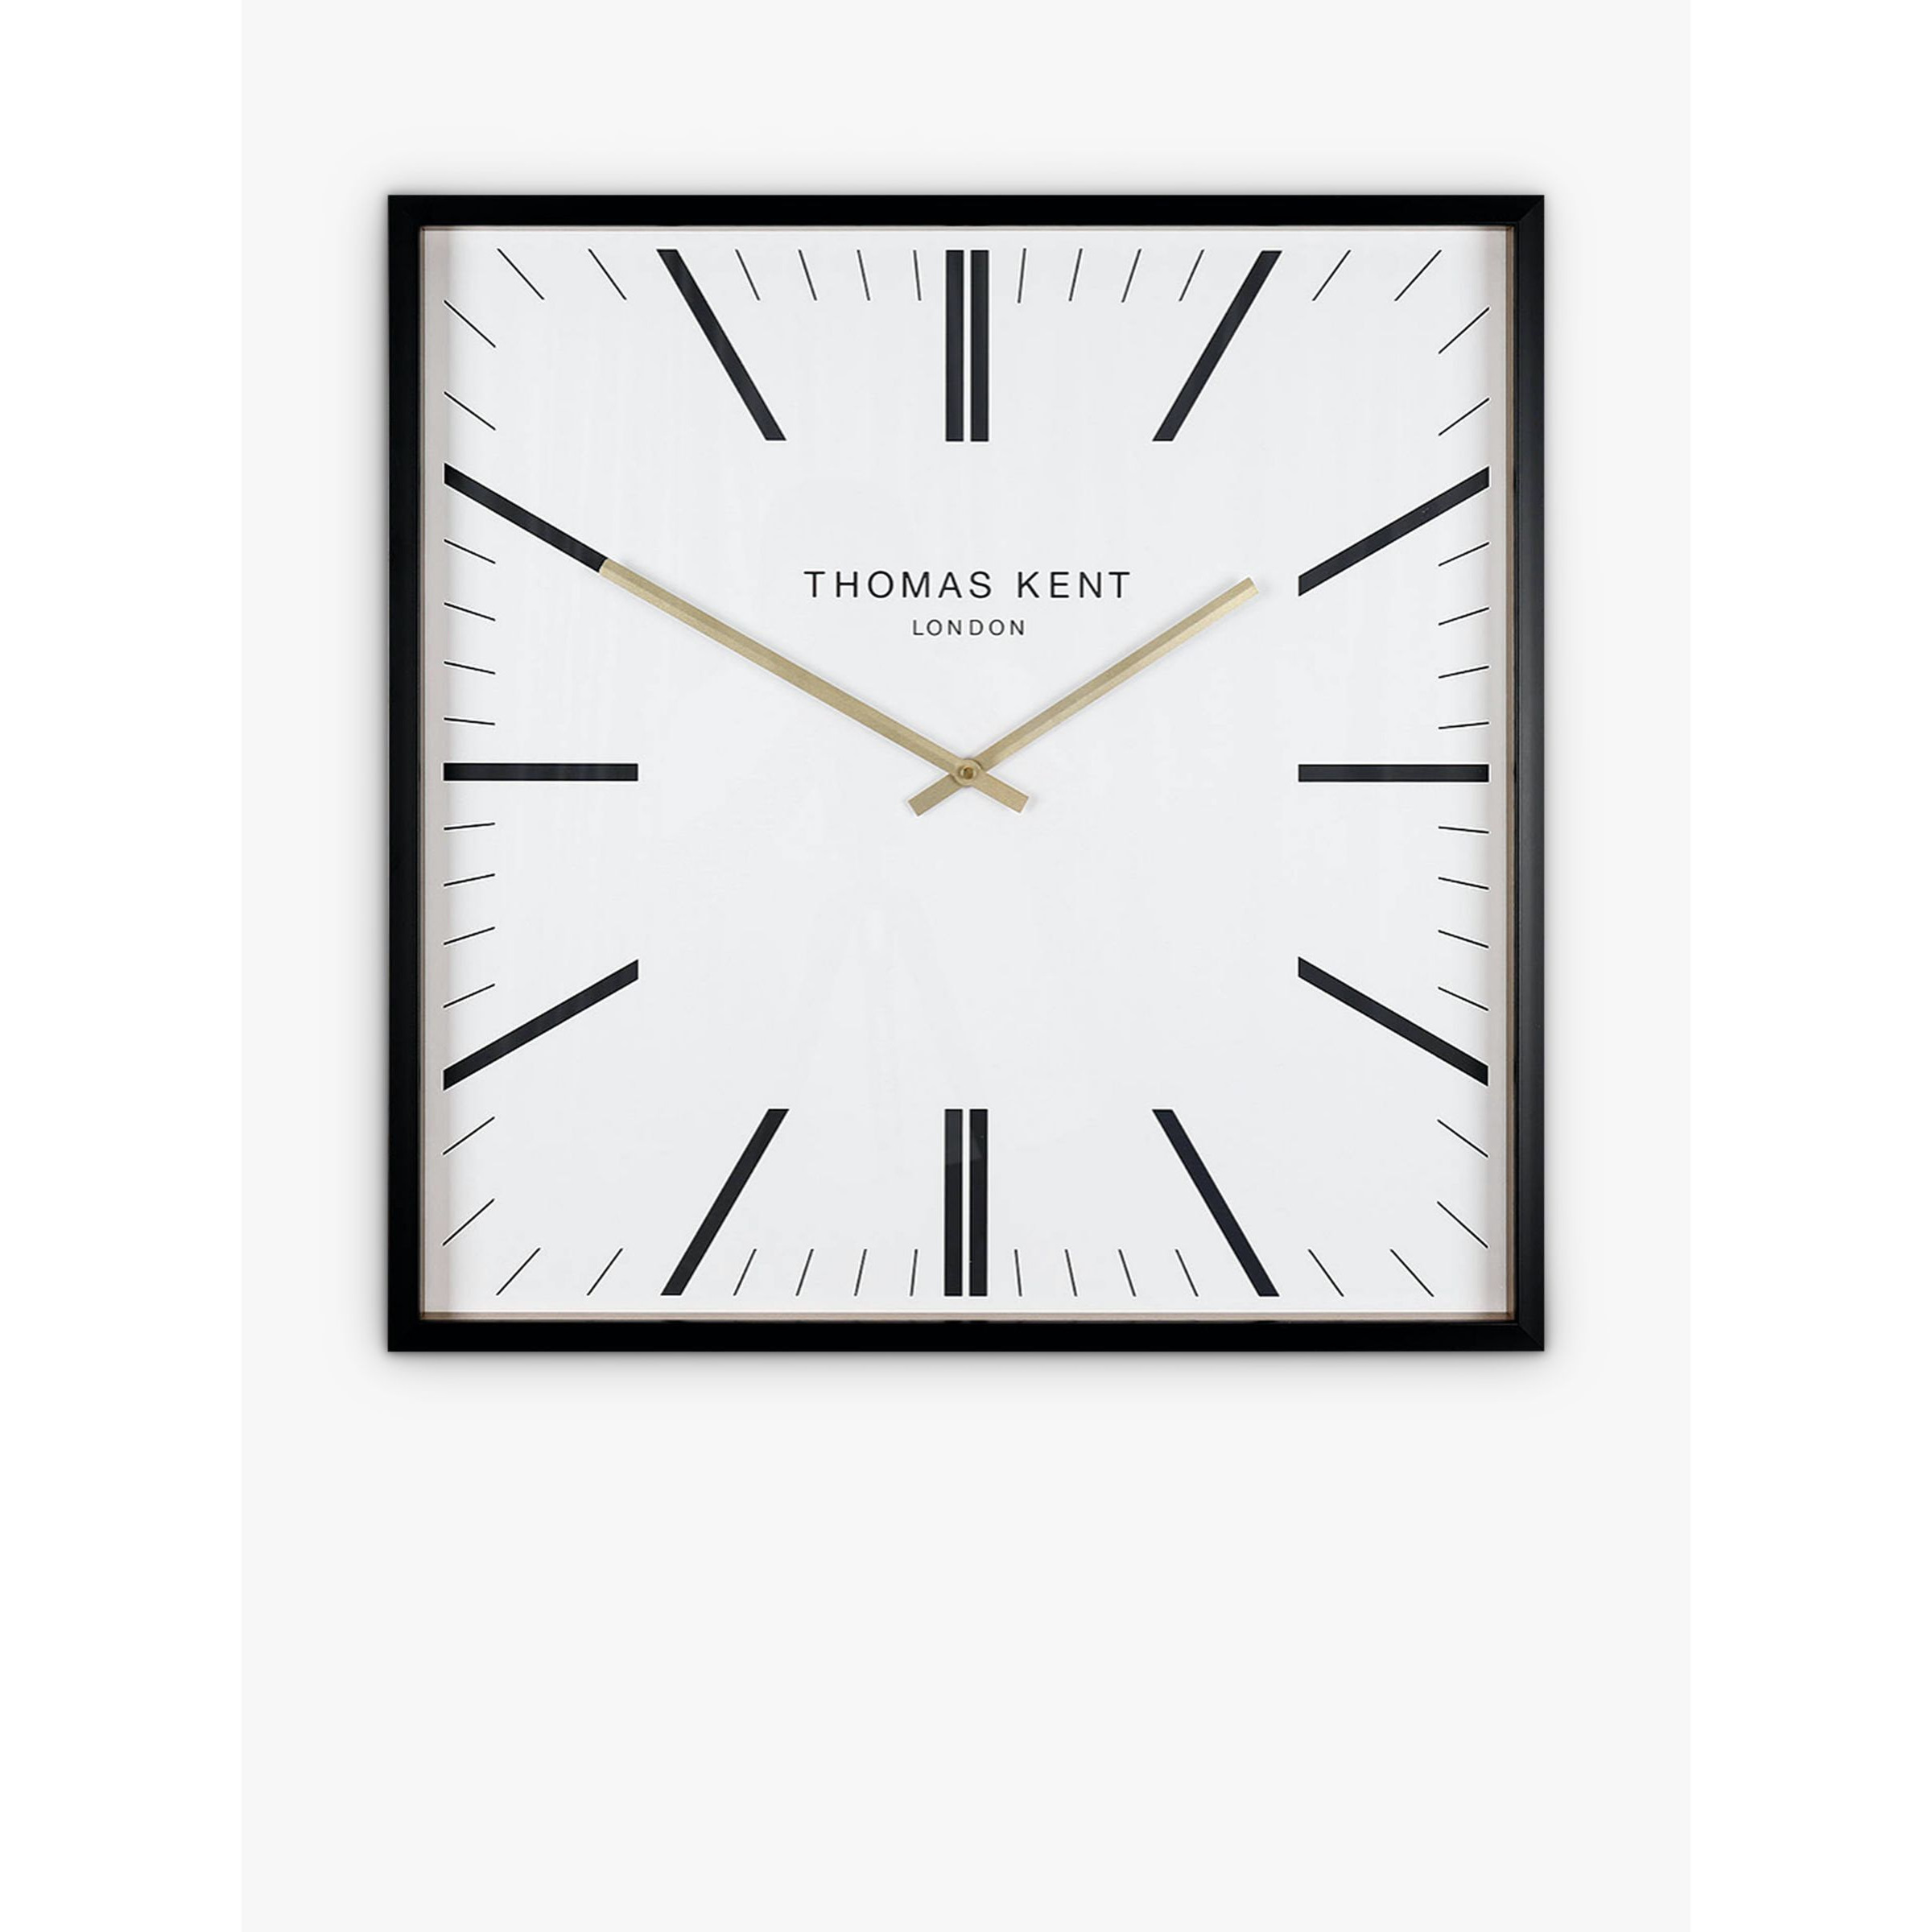 Thomas Kent Garrick Square Analogue Wall Clock, 40cm, Black/White - image 1